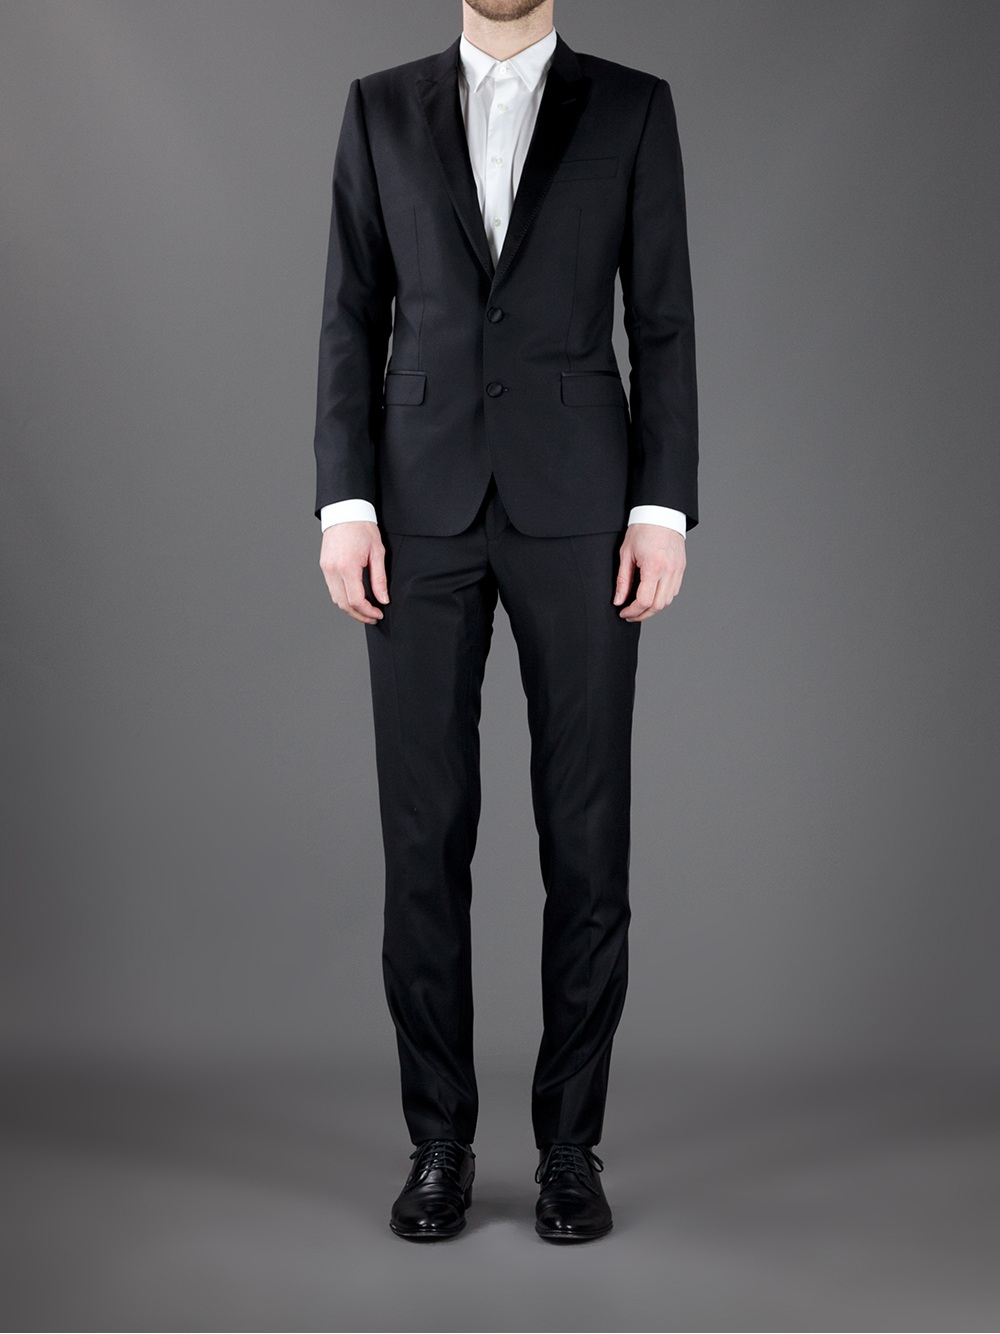 Lyst - Dolce & Gabbana Tuxedo Suit in Black for Men